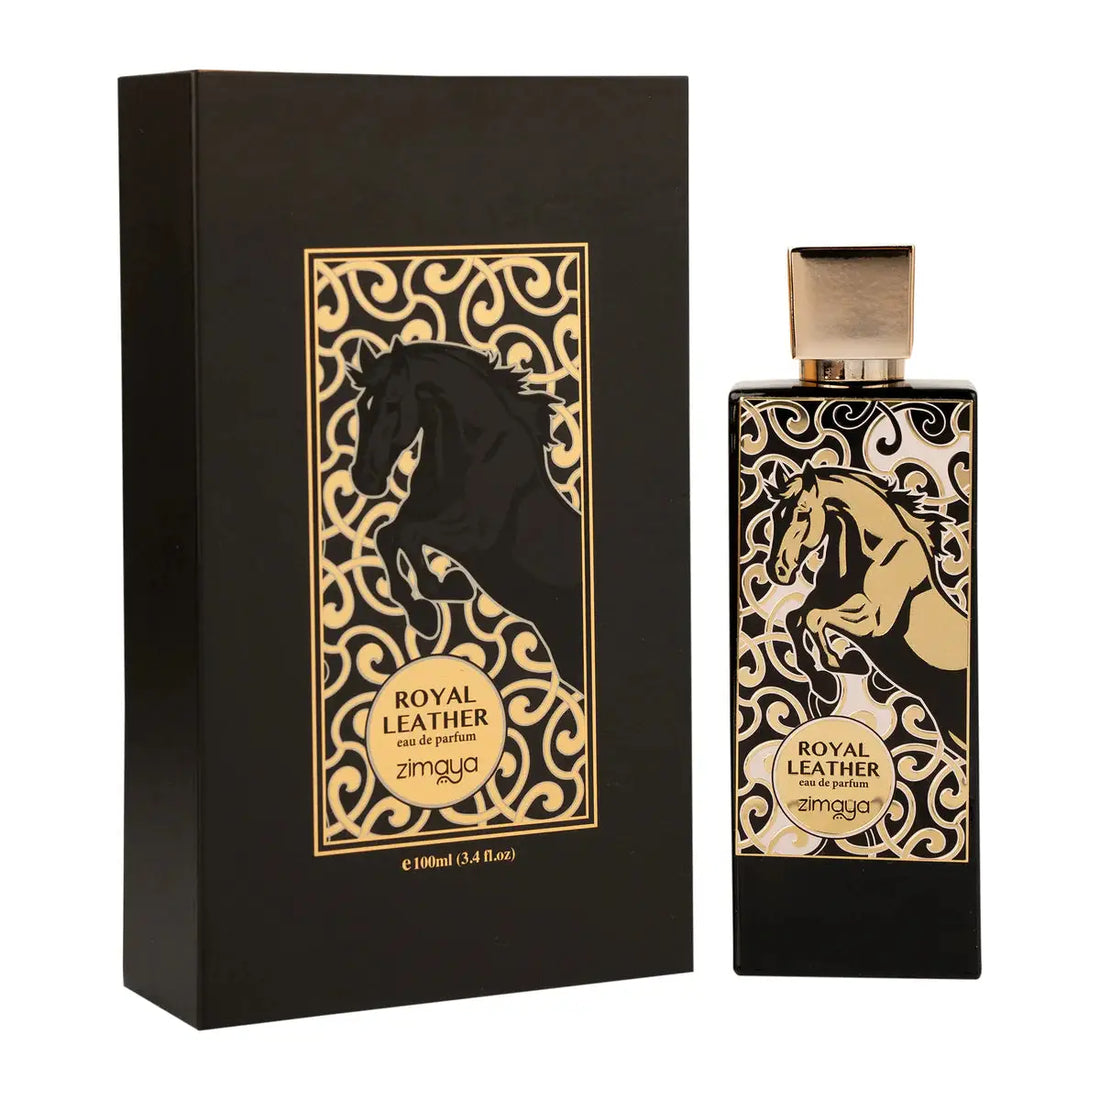 Elegant 100ml bottle of Zimaya Royal Leather Eau De Parfum, showcasing its luxurious design and the essence of sophistication.